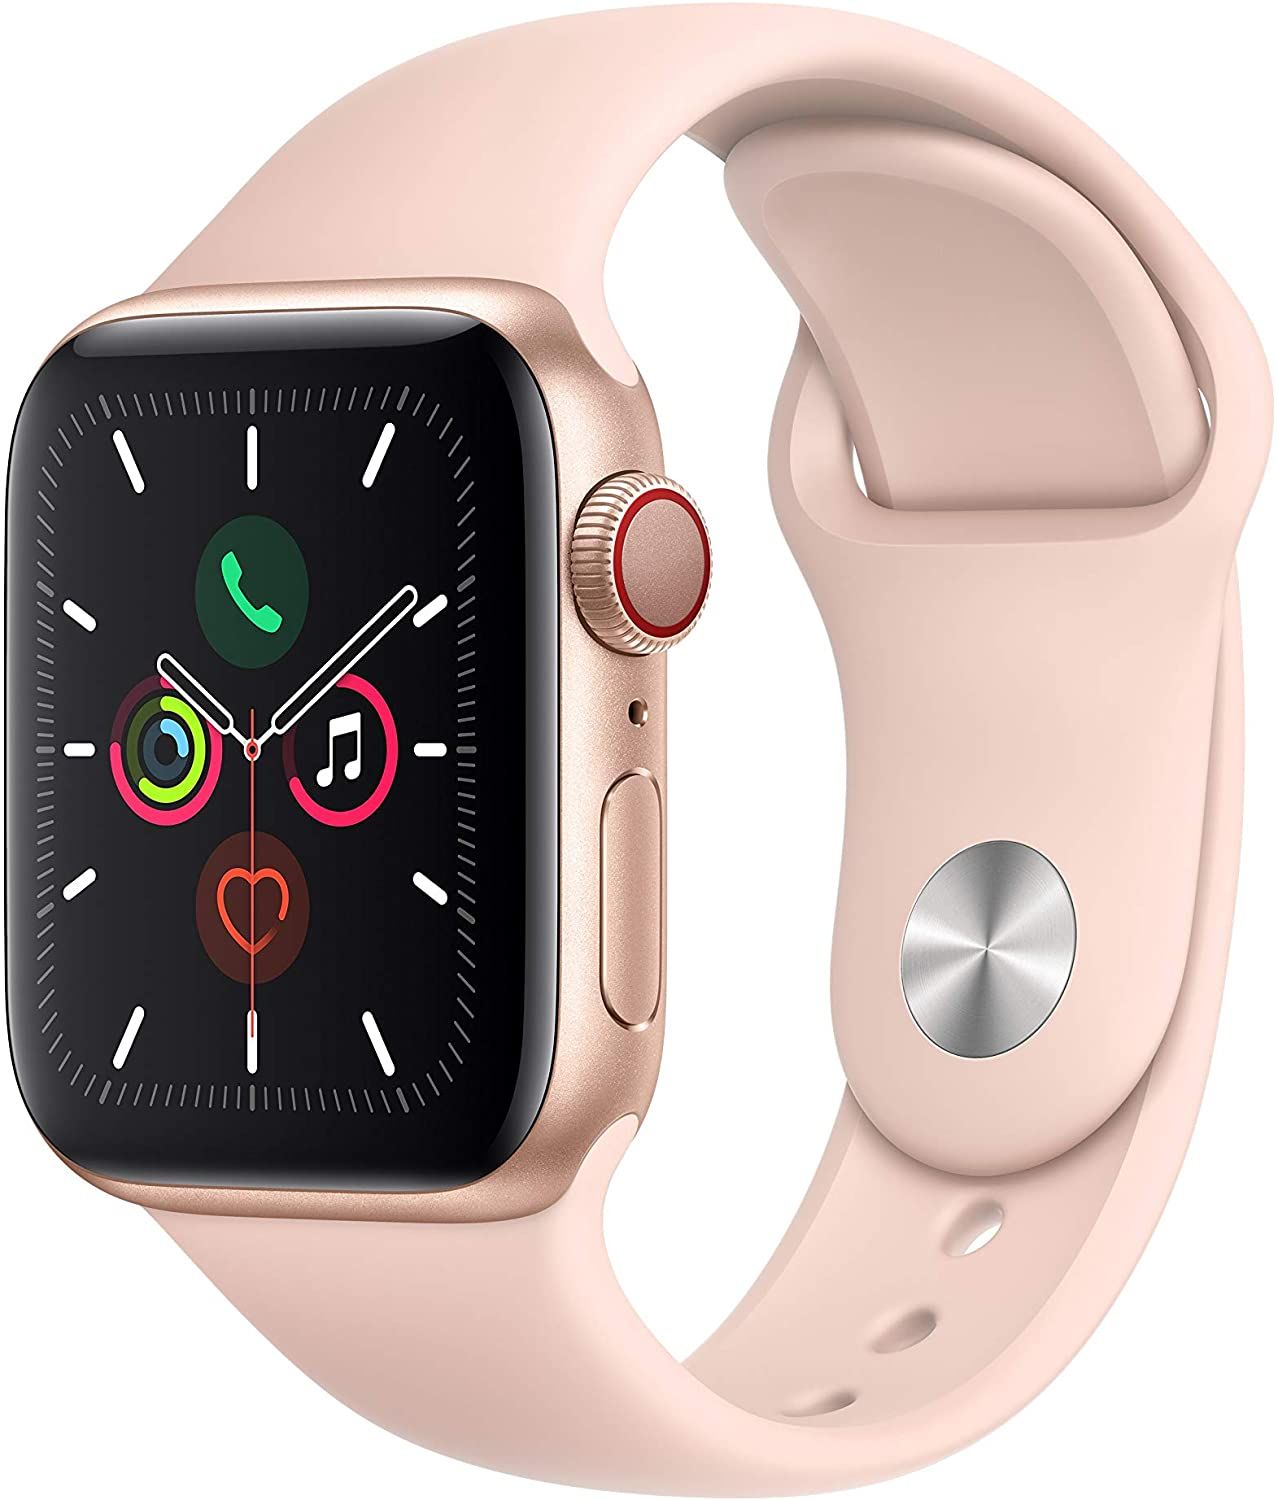 Apple Watch Side View